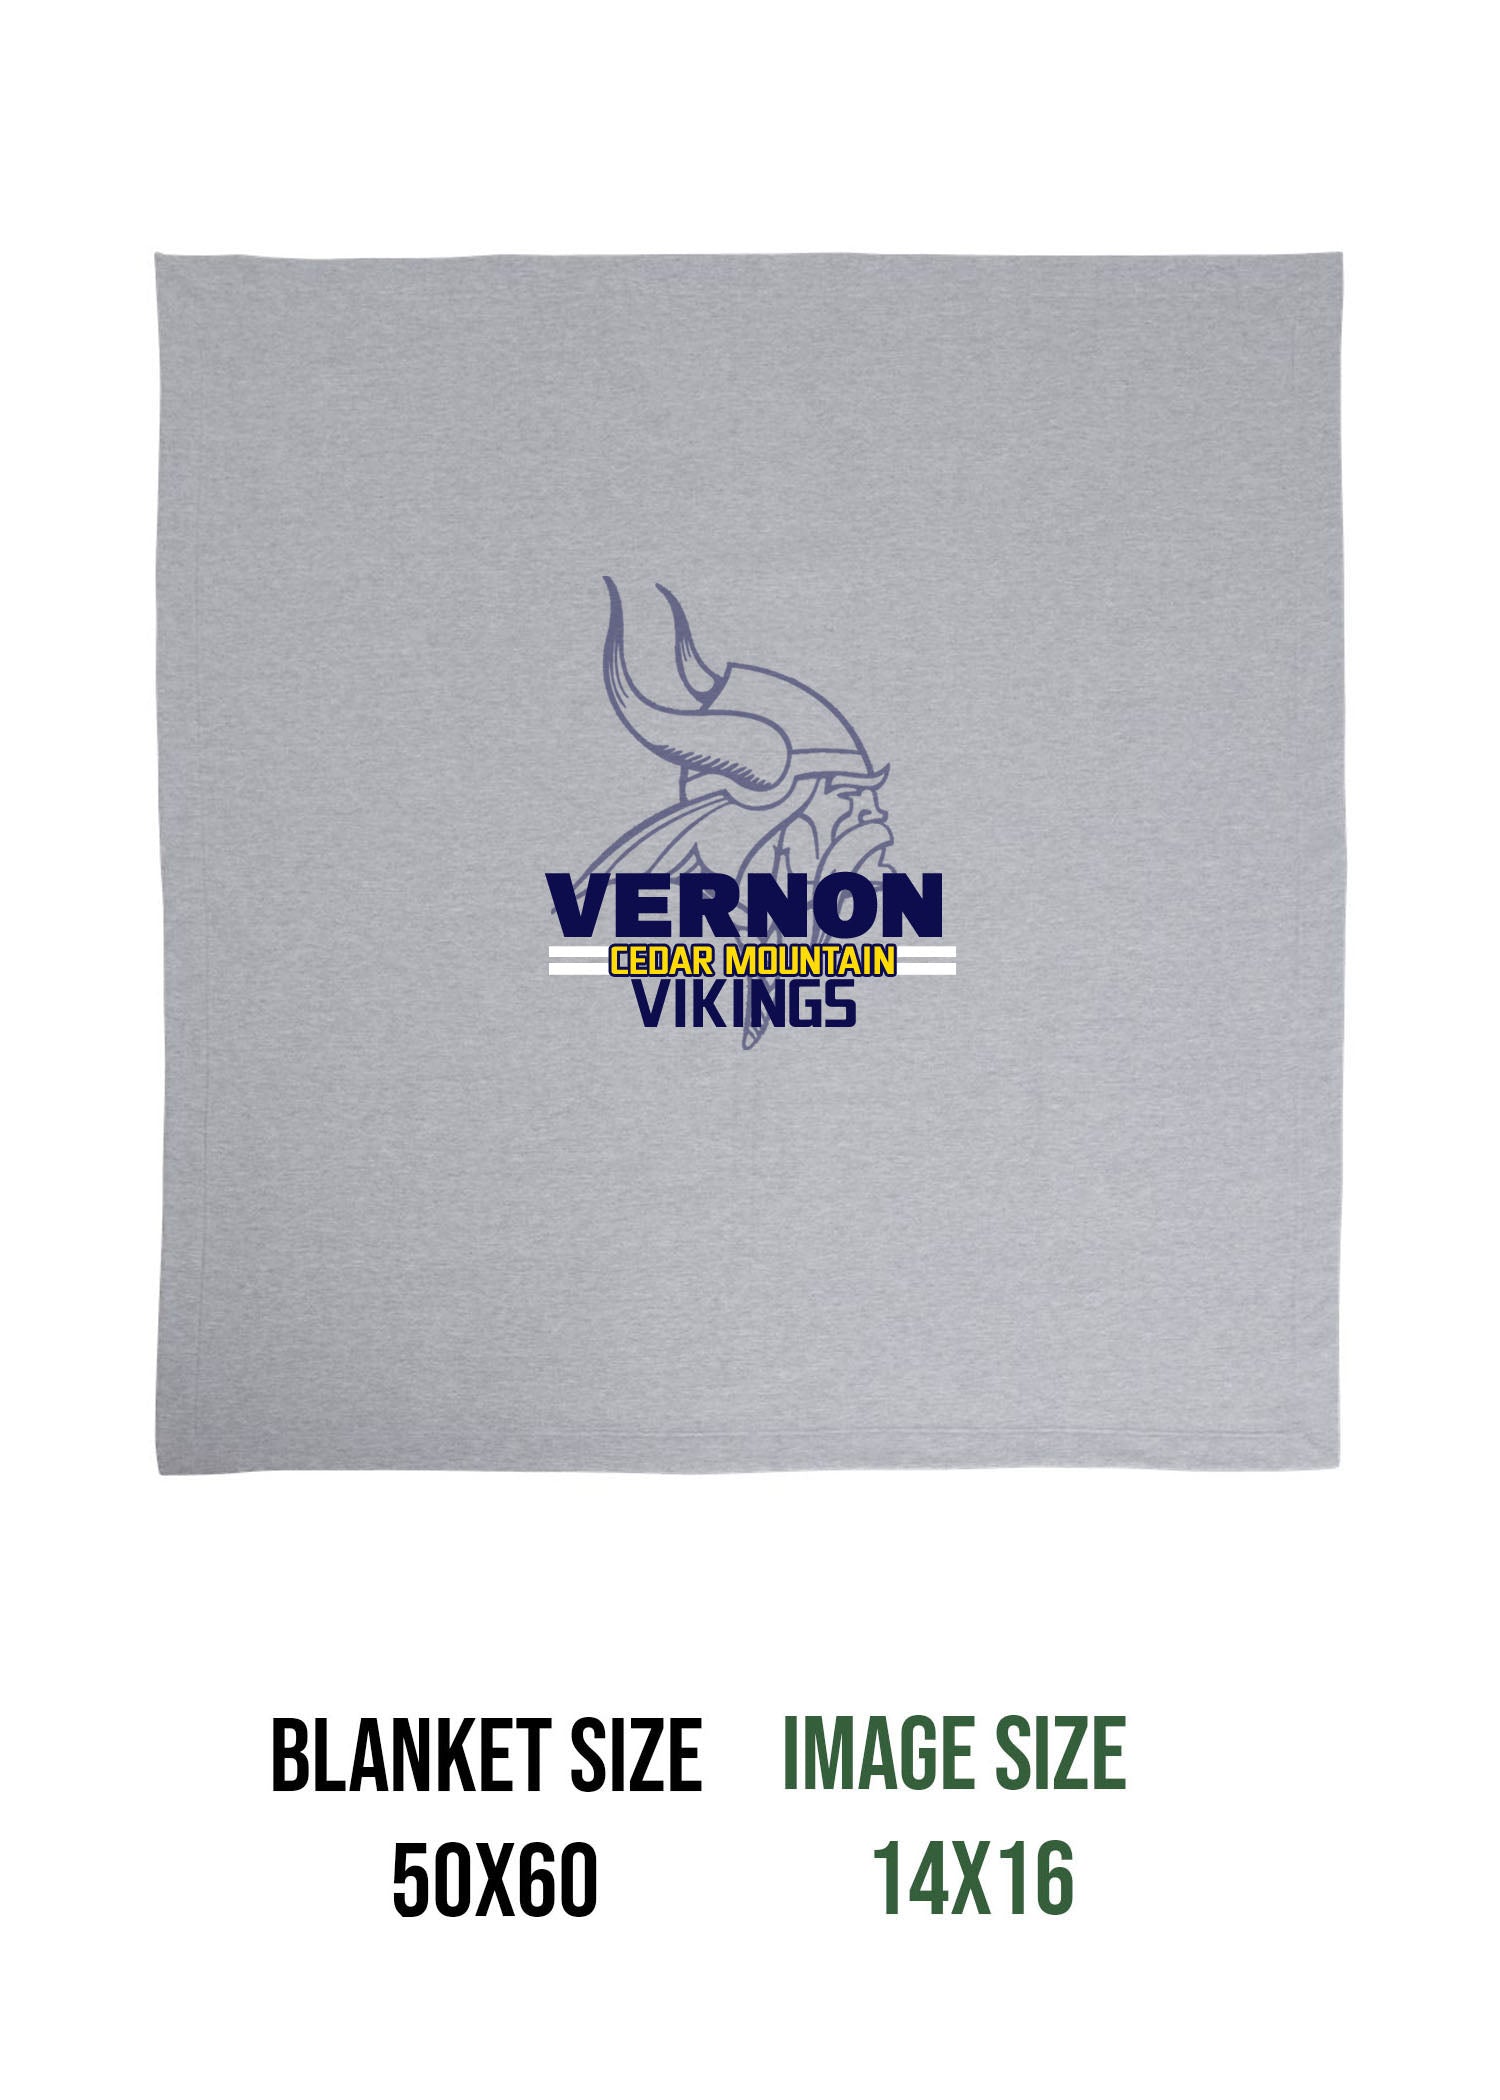 Vernon Design 9 Blanket